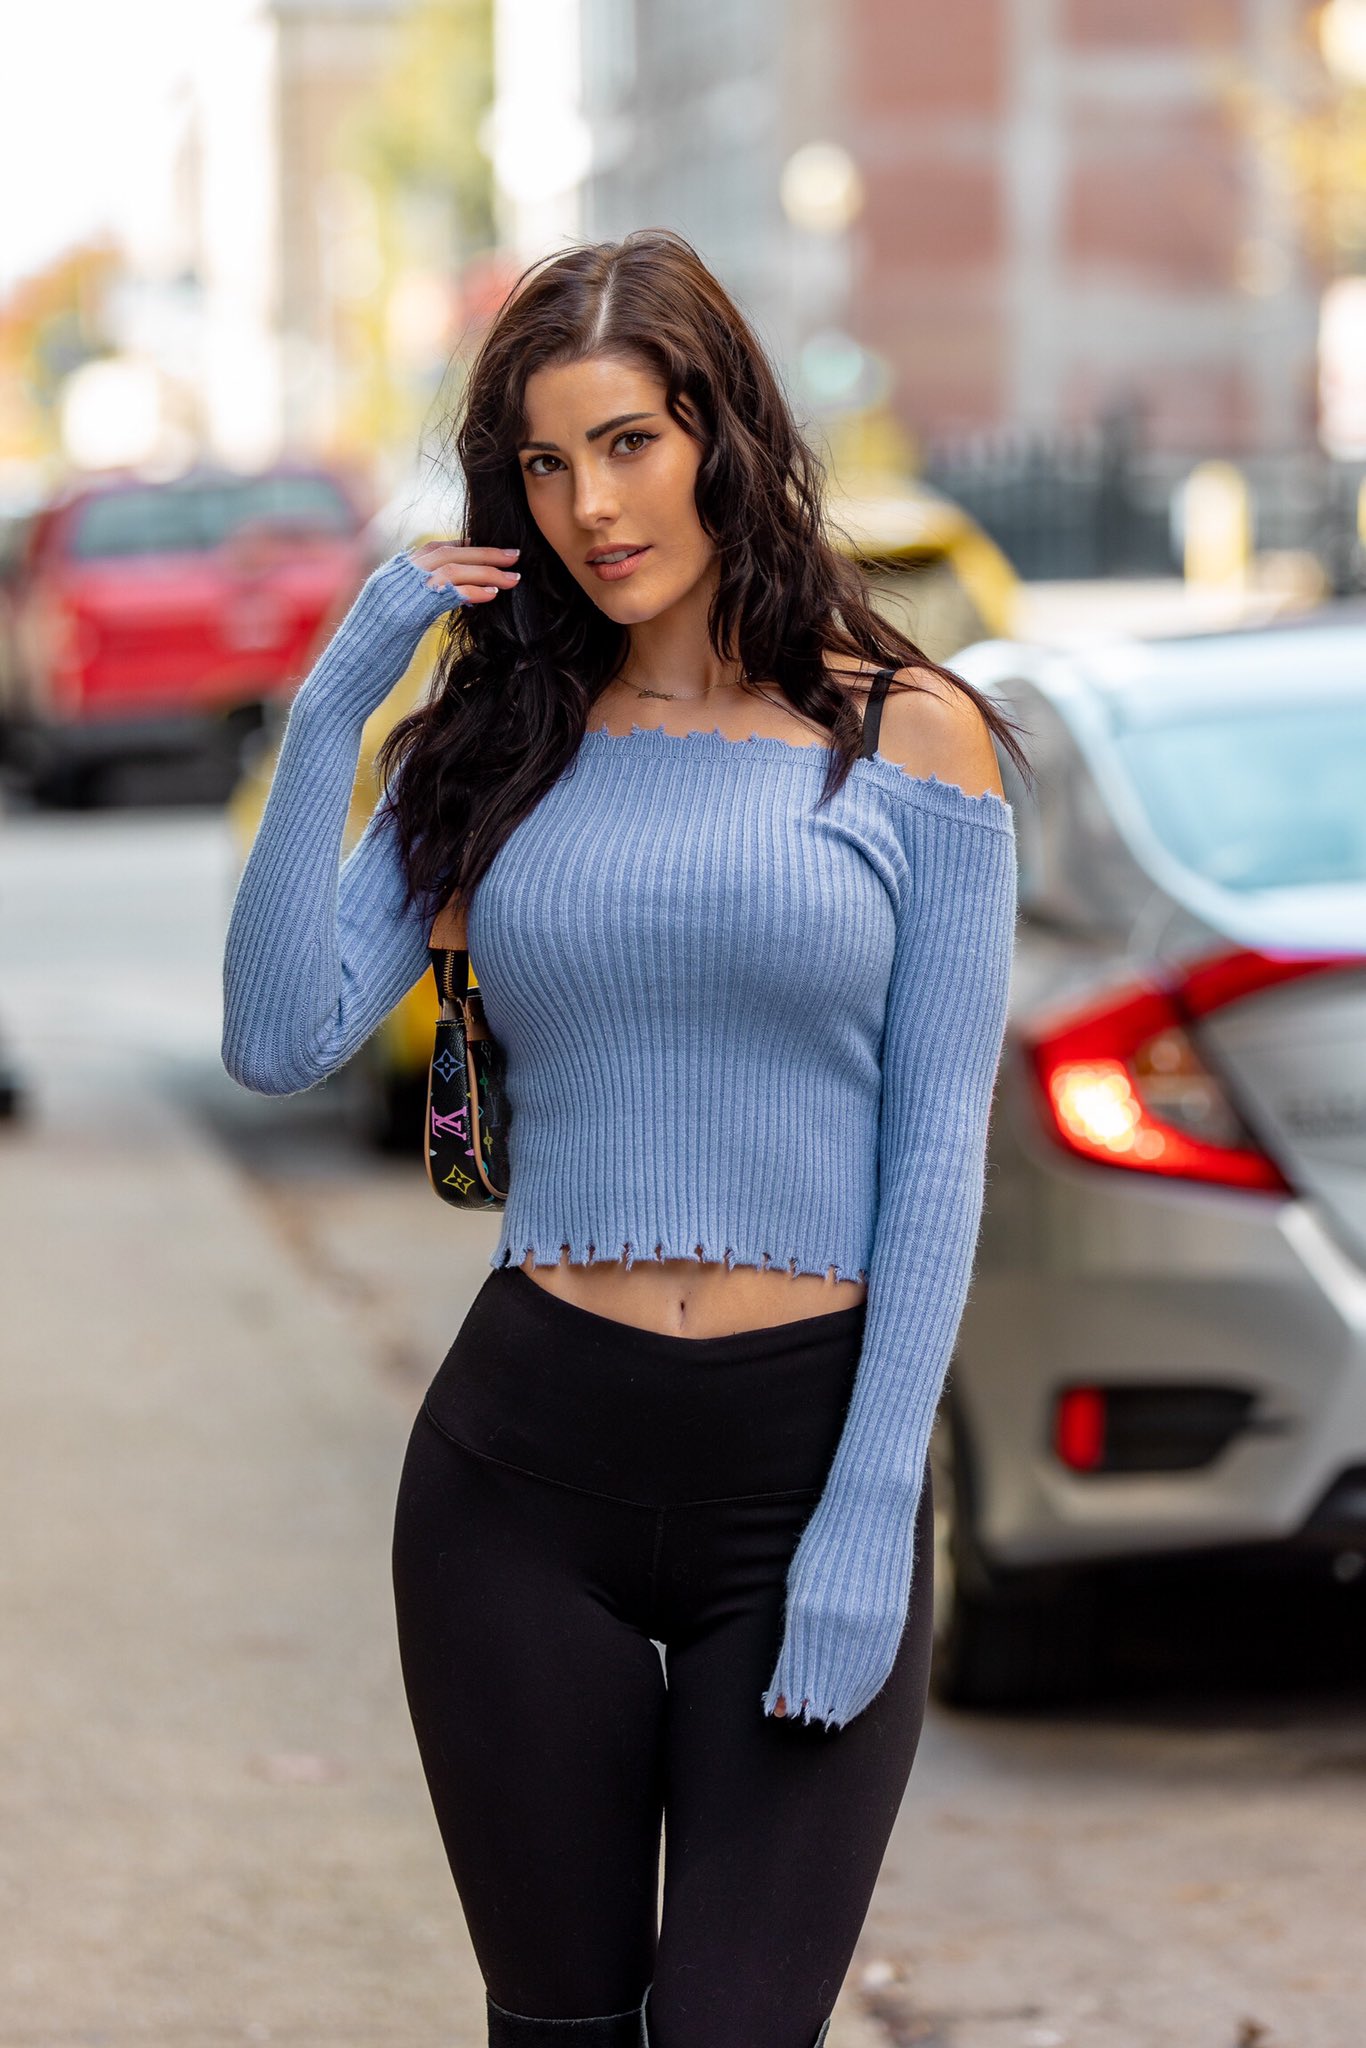 Erin Olash Women Model Brunette Women Outdoors Sweater Street Car Public Handbags Louis Vuitton Blue 1366x2048